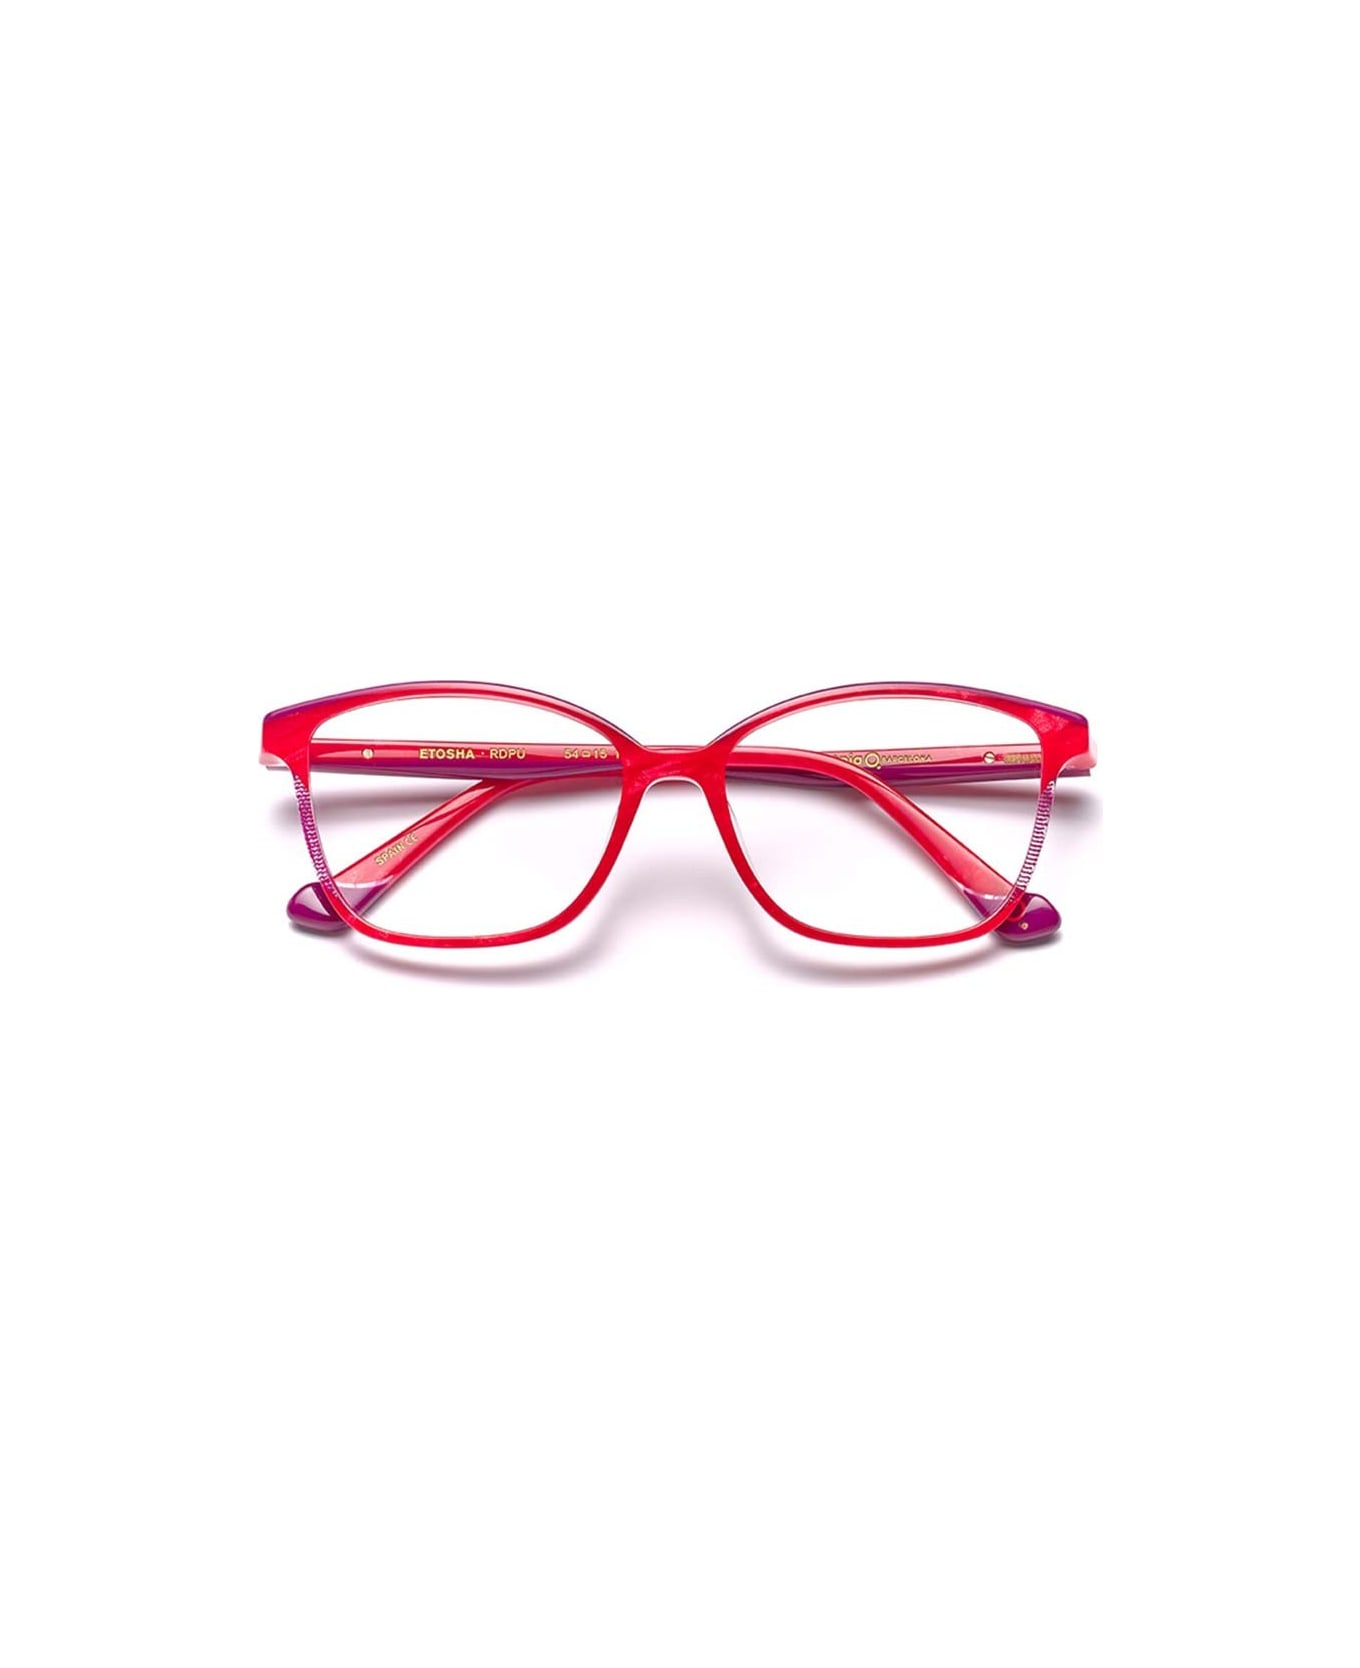 Etnia Barcelona Eyewear - Rosso